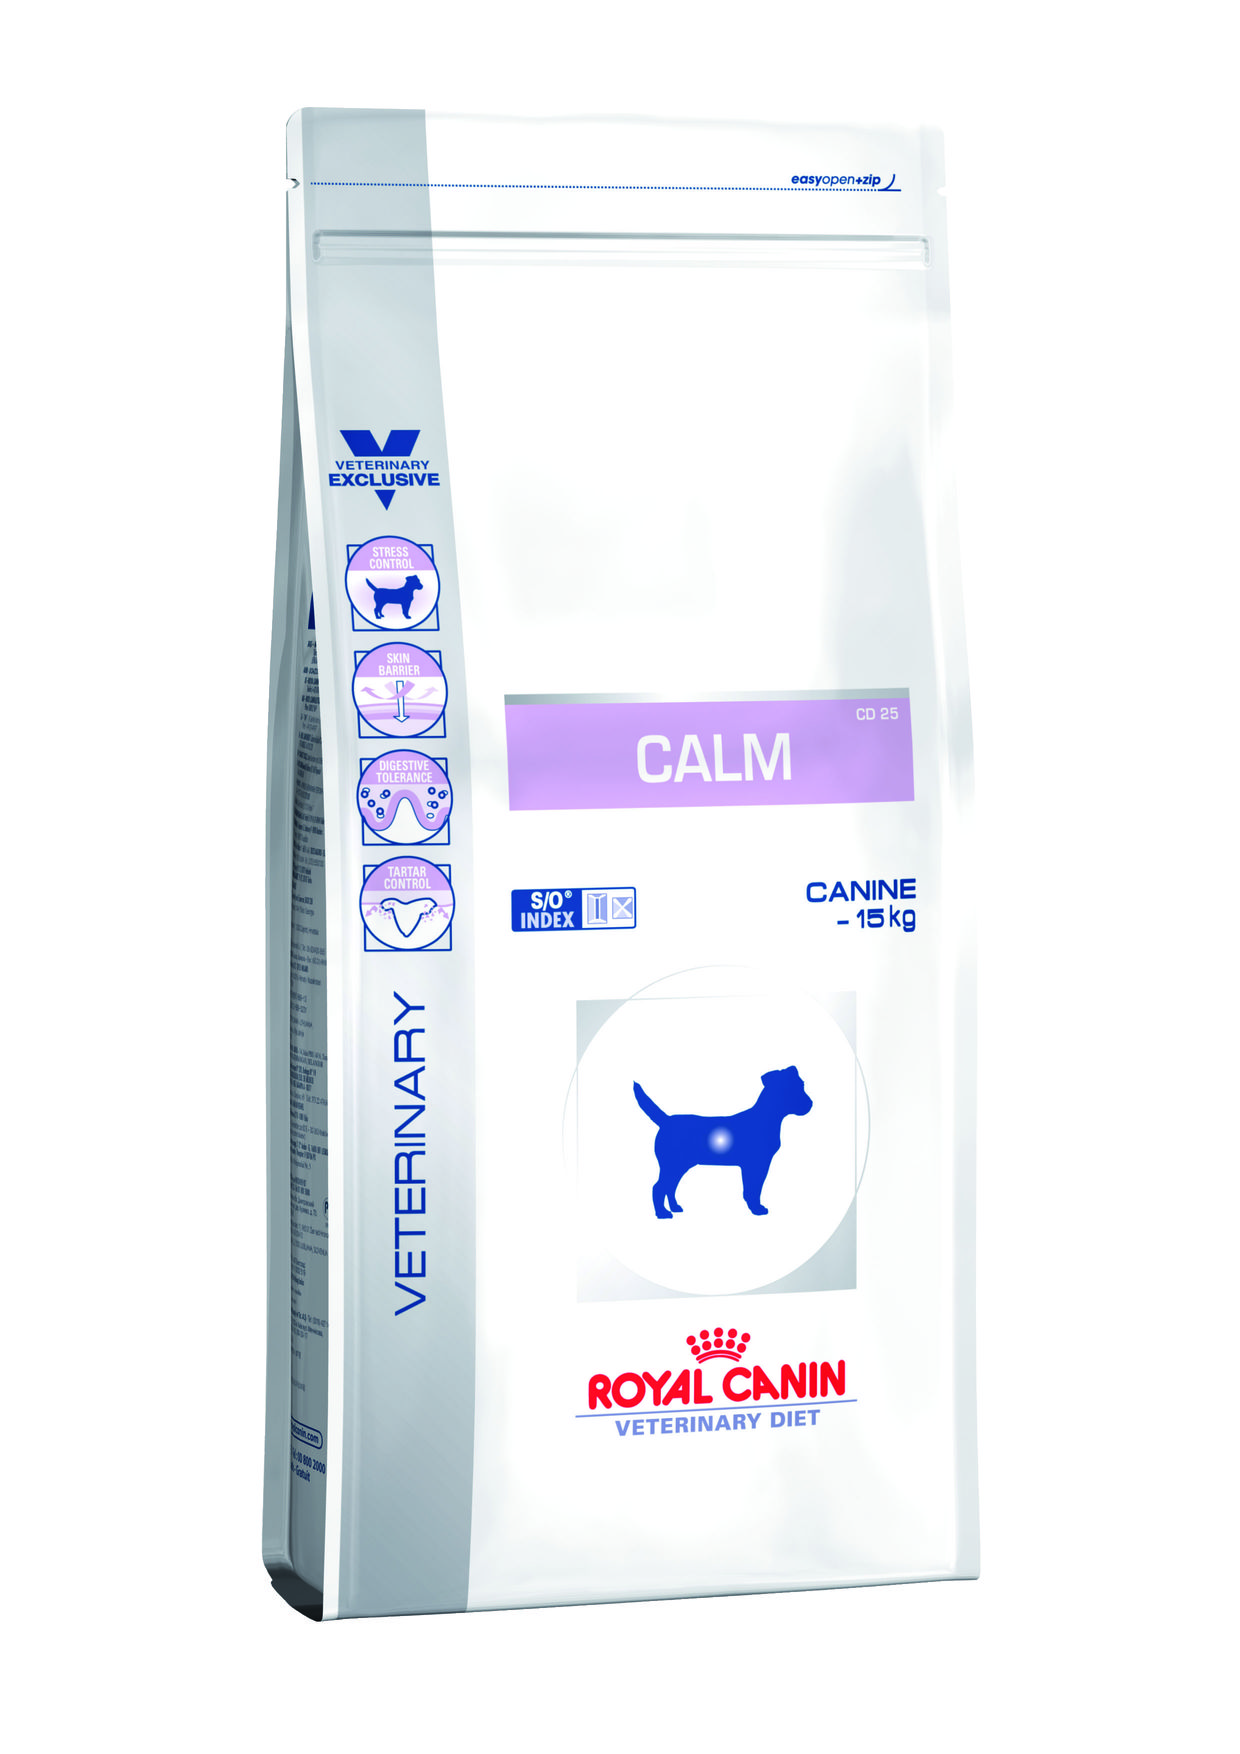 royal canin calm